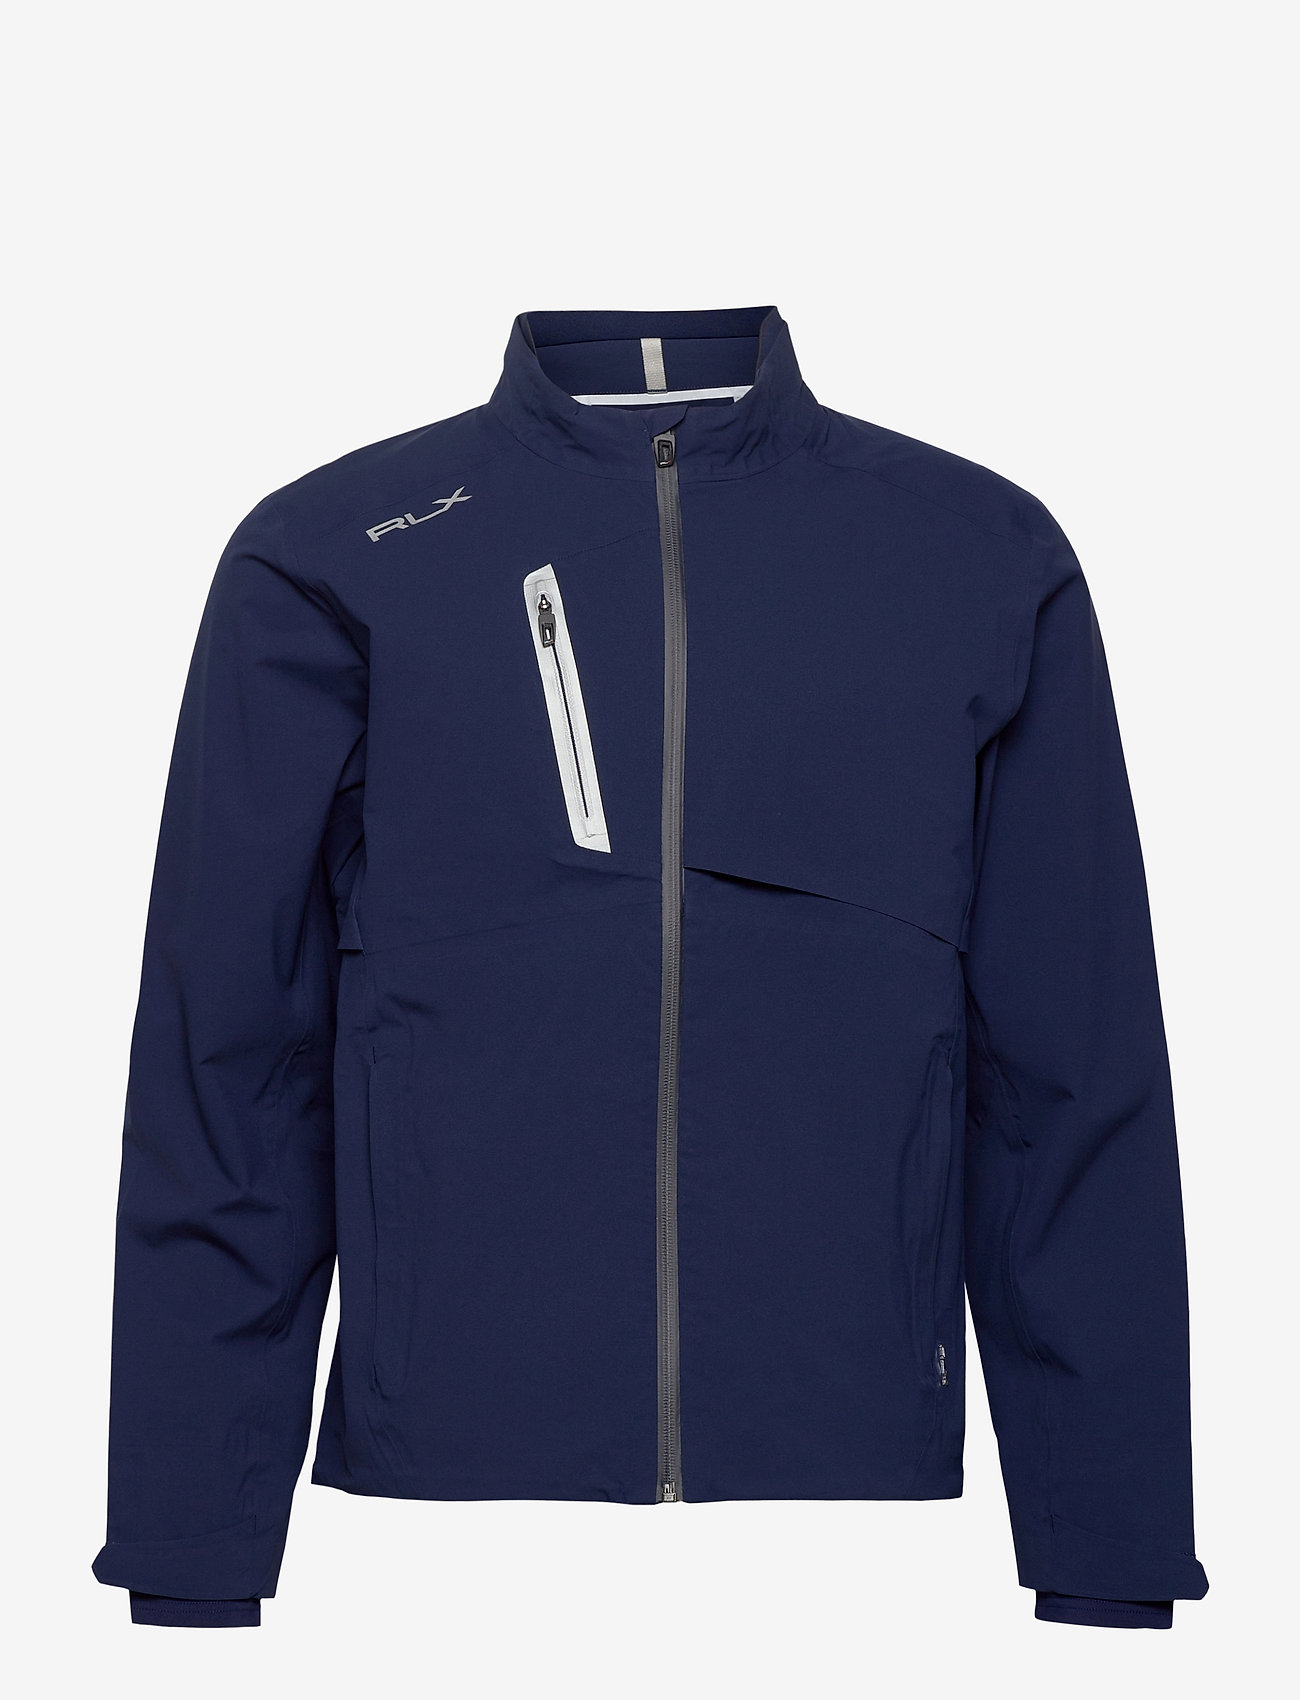 rlx golf rain jacket